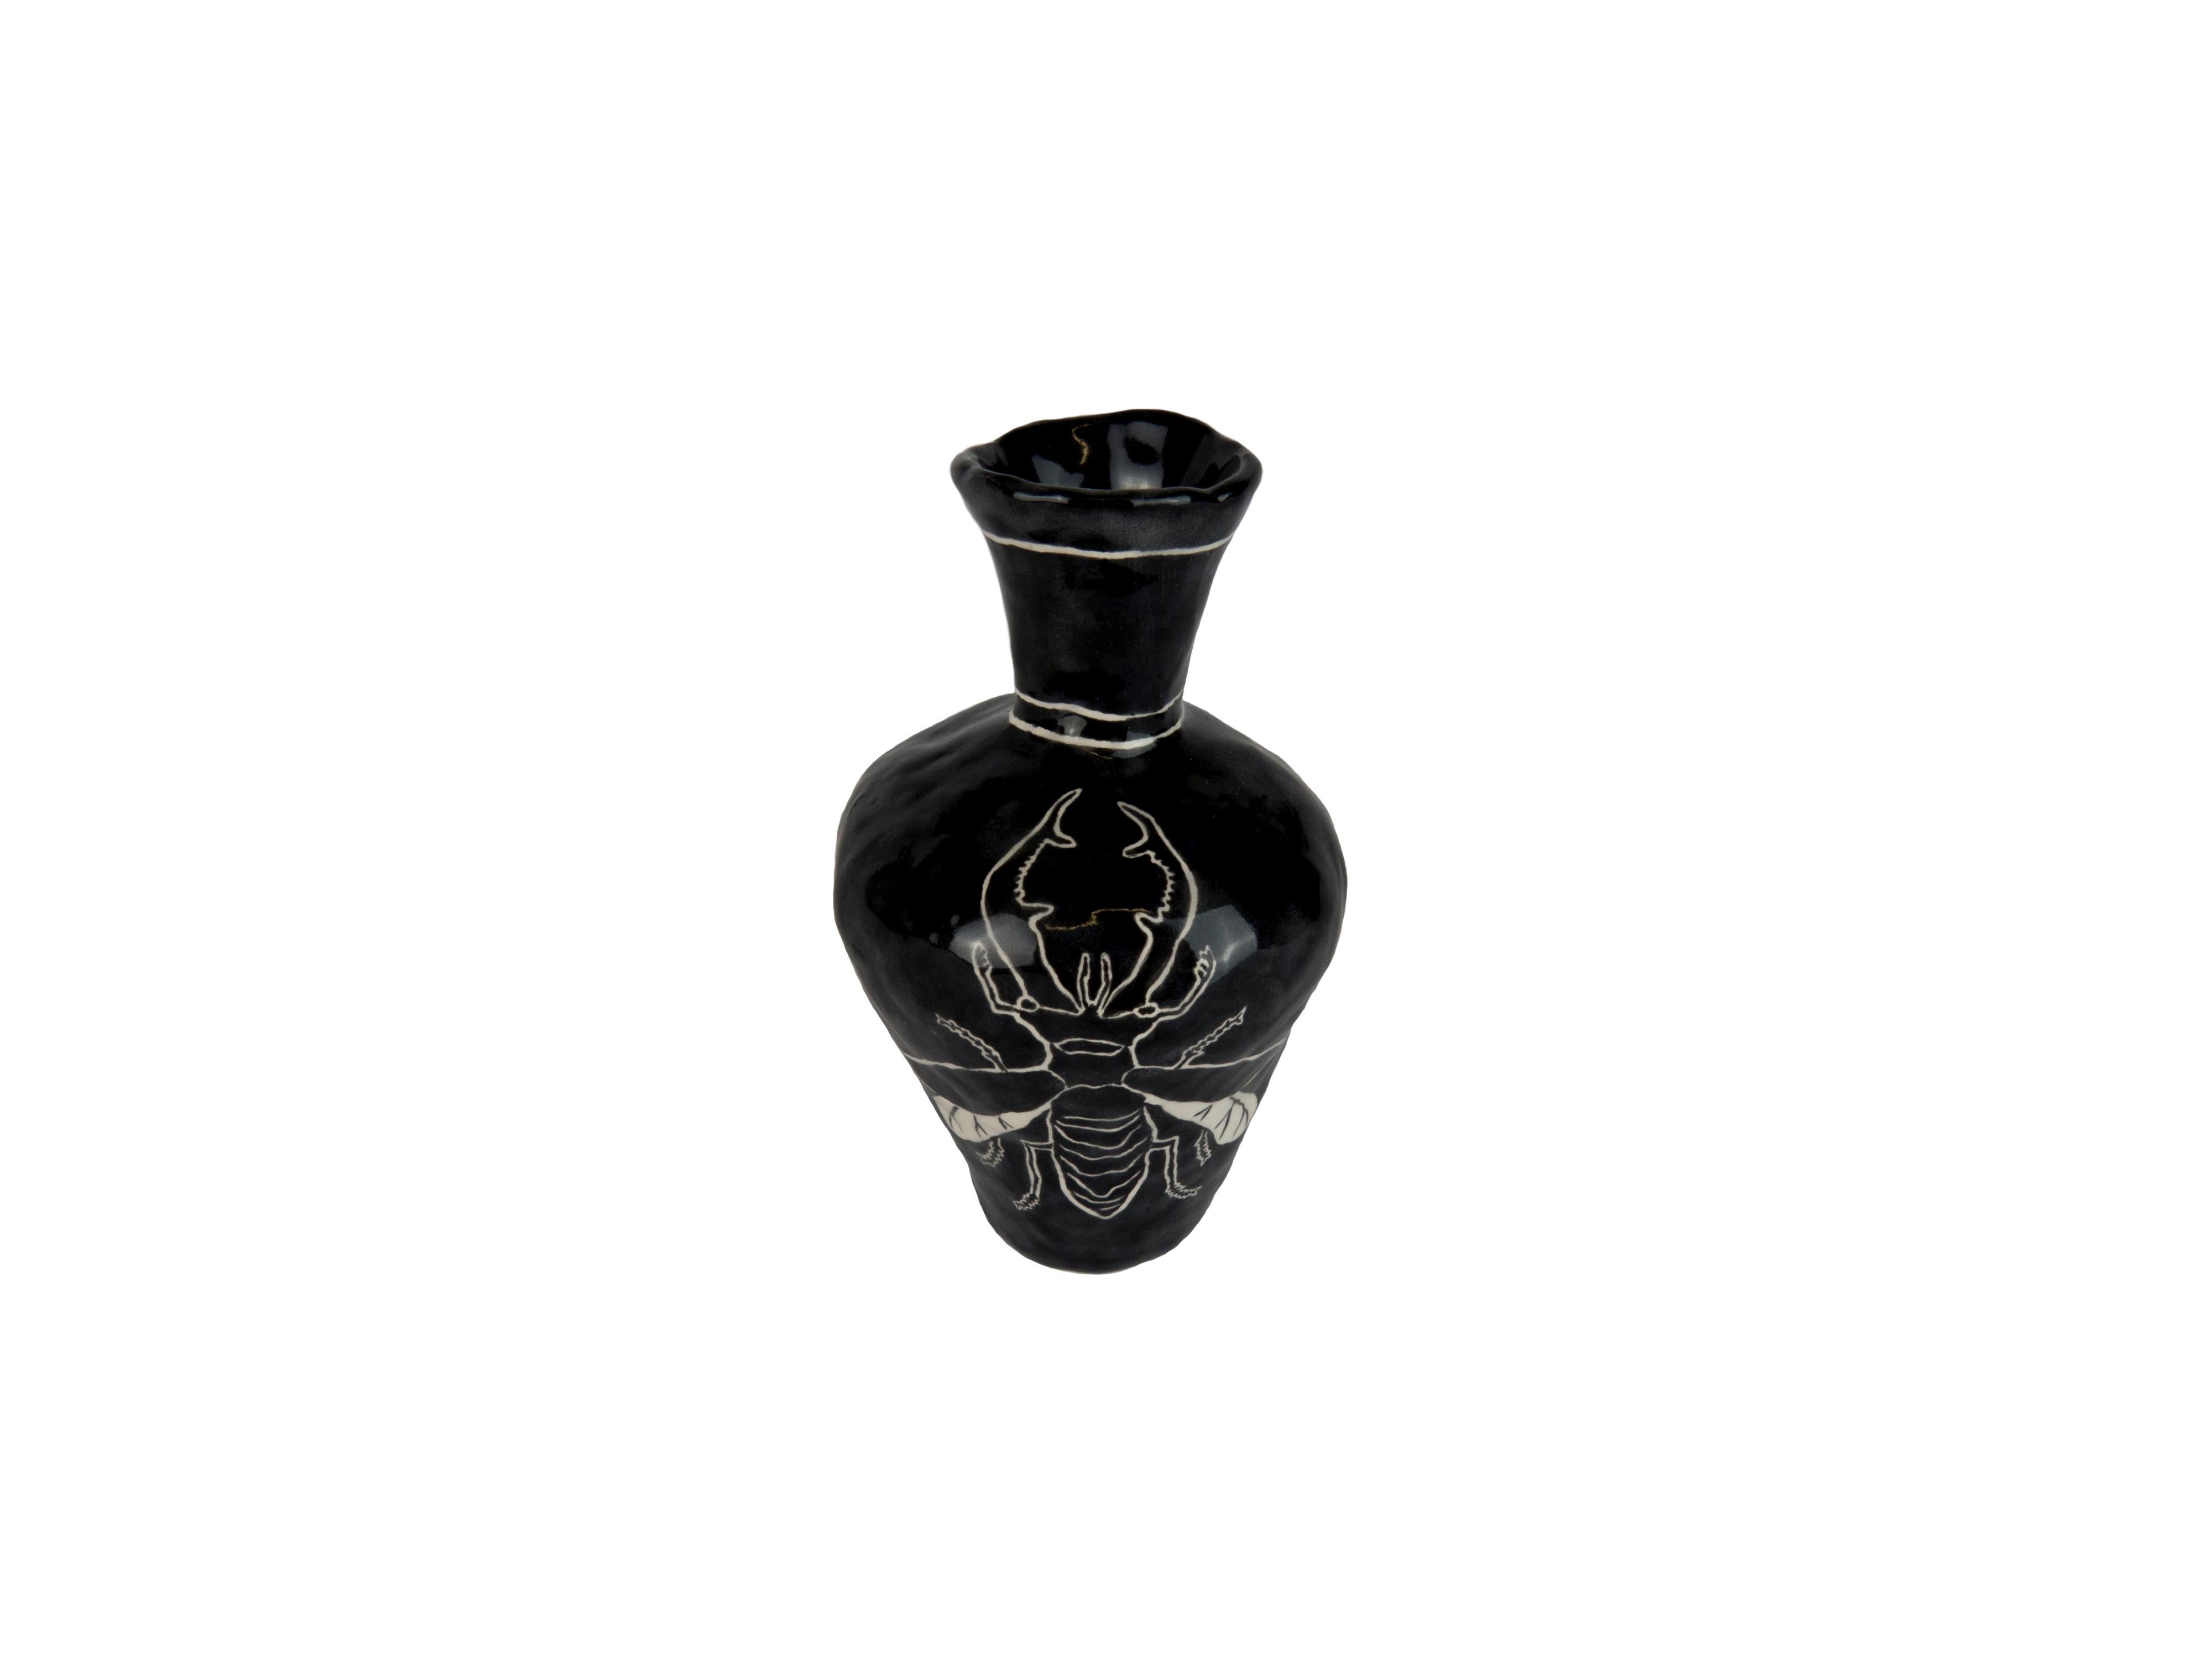 'Black Stag Bottle' by Katy Stubbs. Ceramic earthenware with underglaze.

